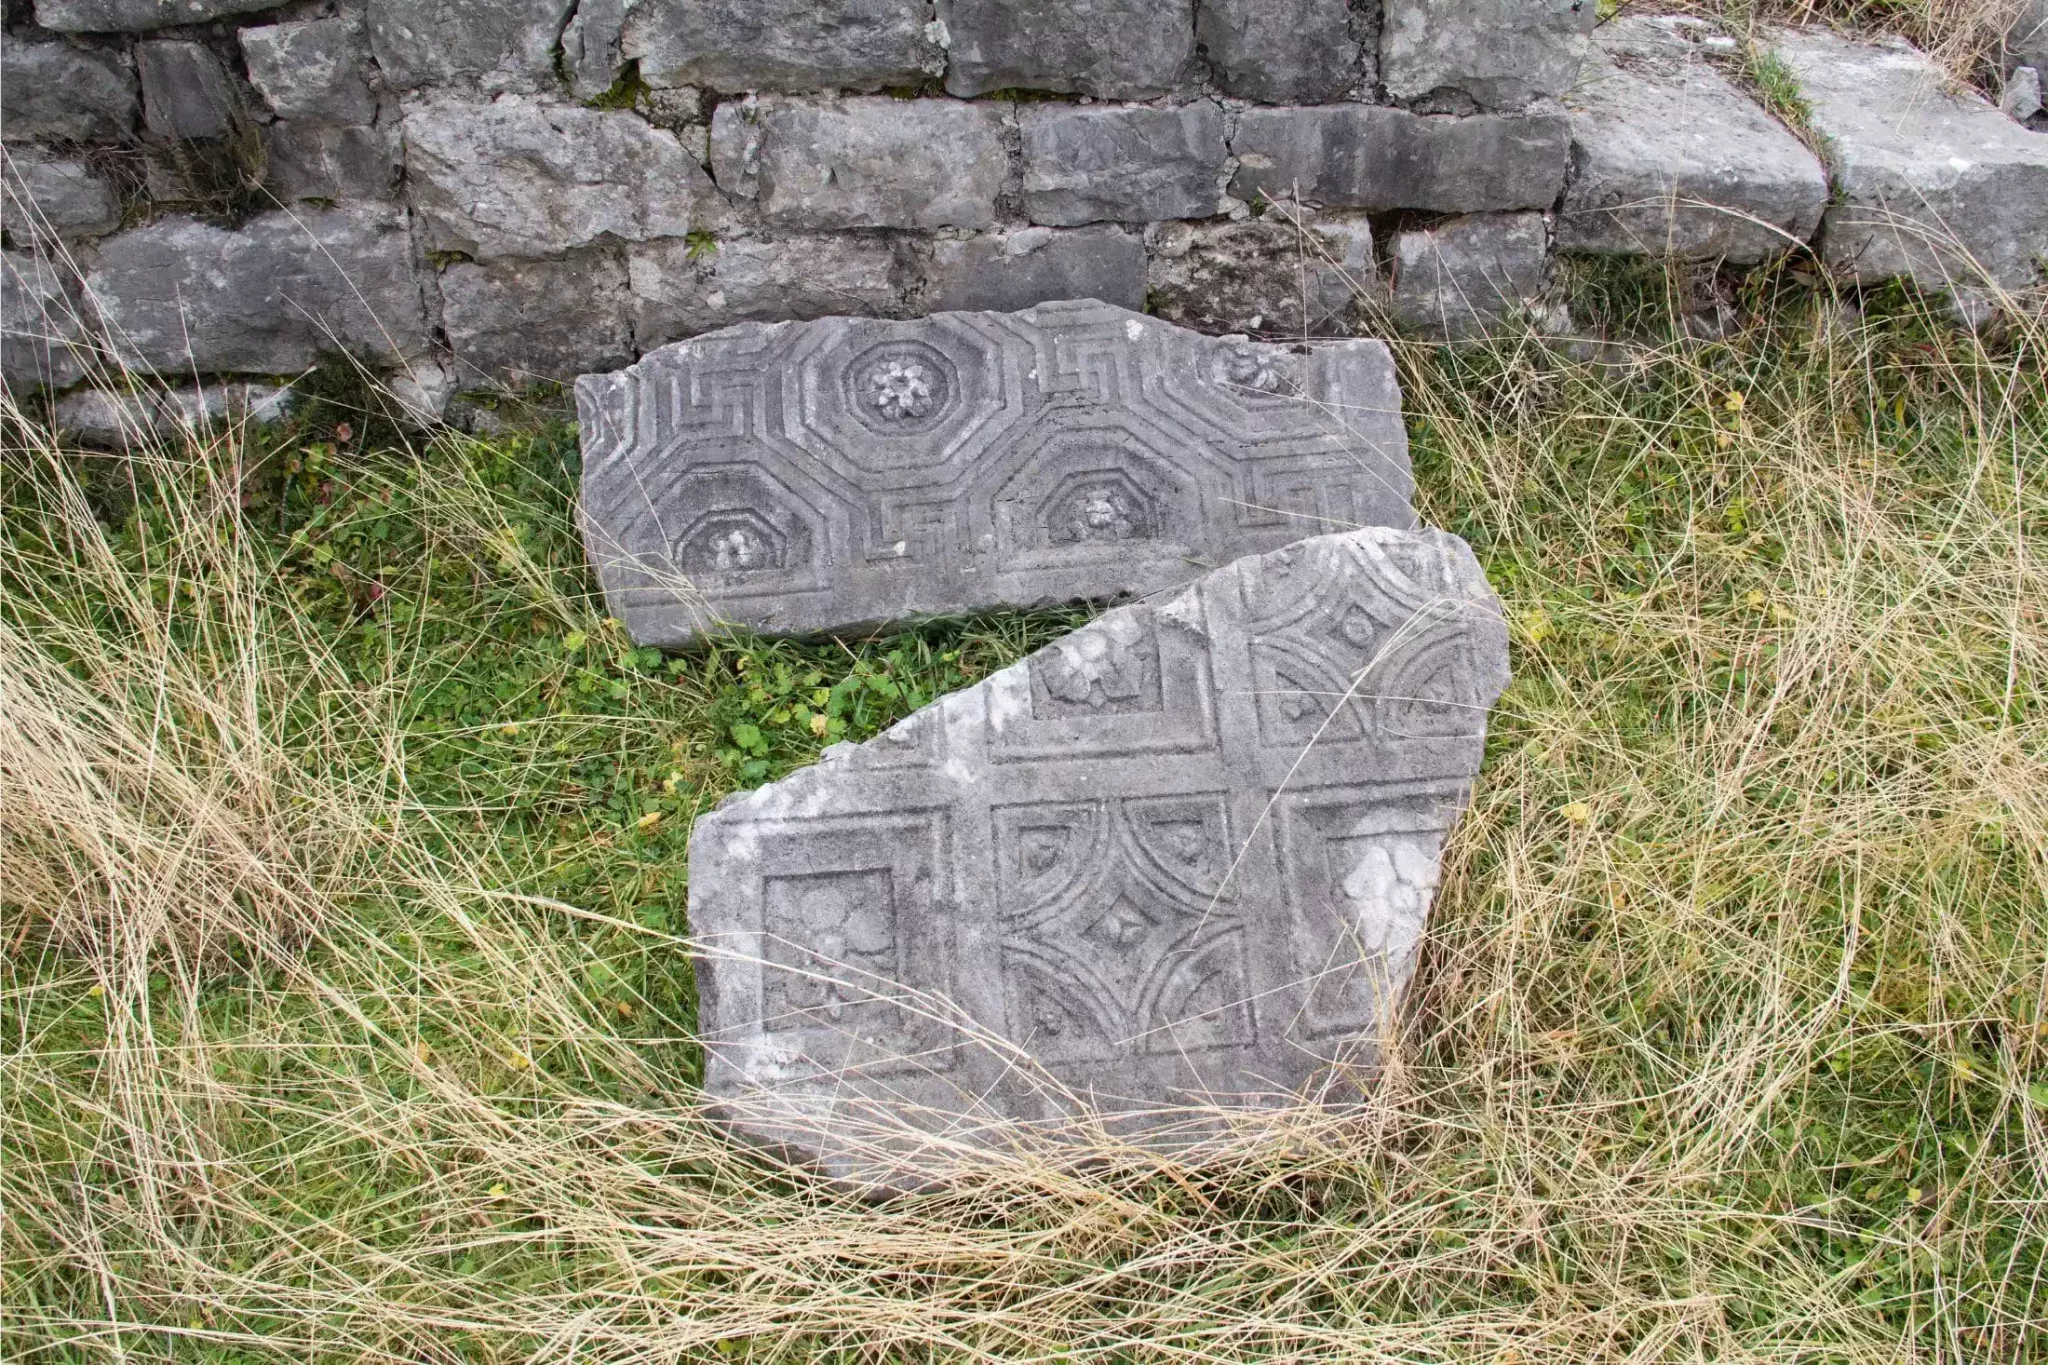 relics from the Duklja Roman sight